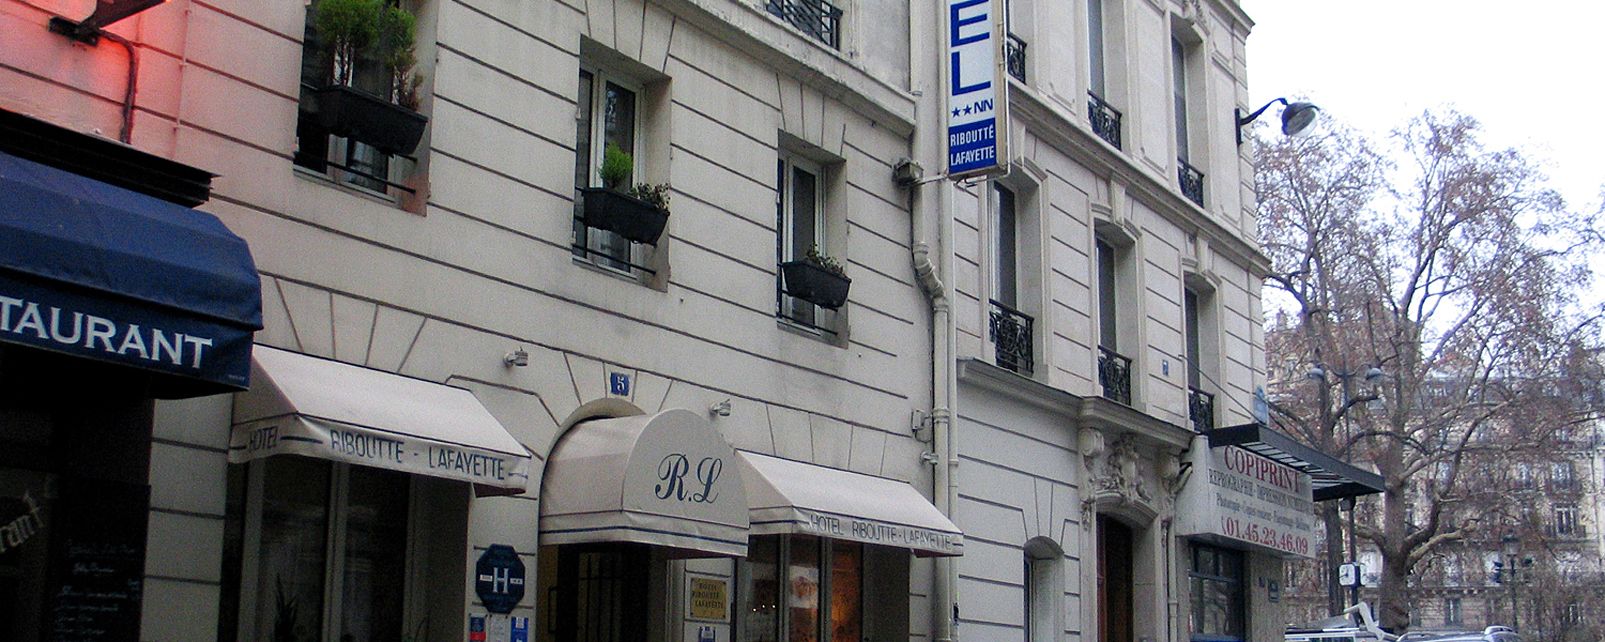 Hotel Riboutté Lafayette